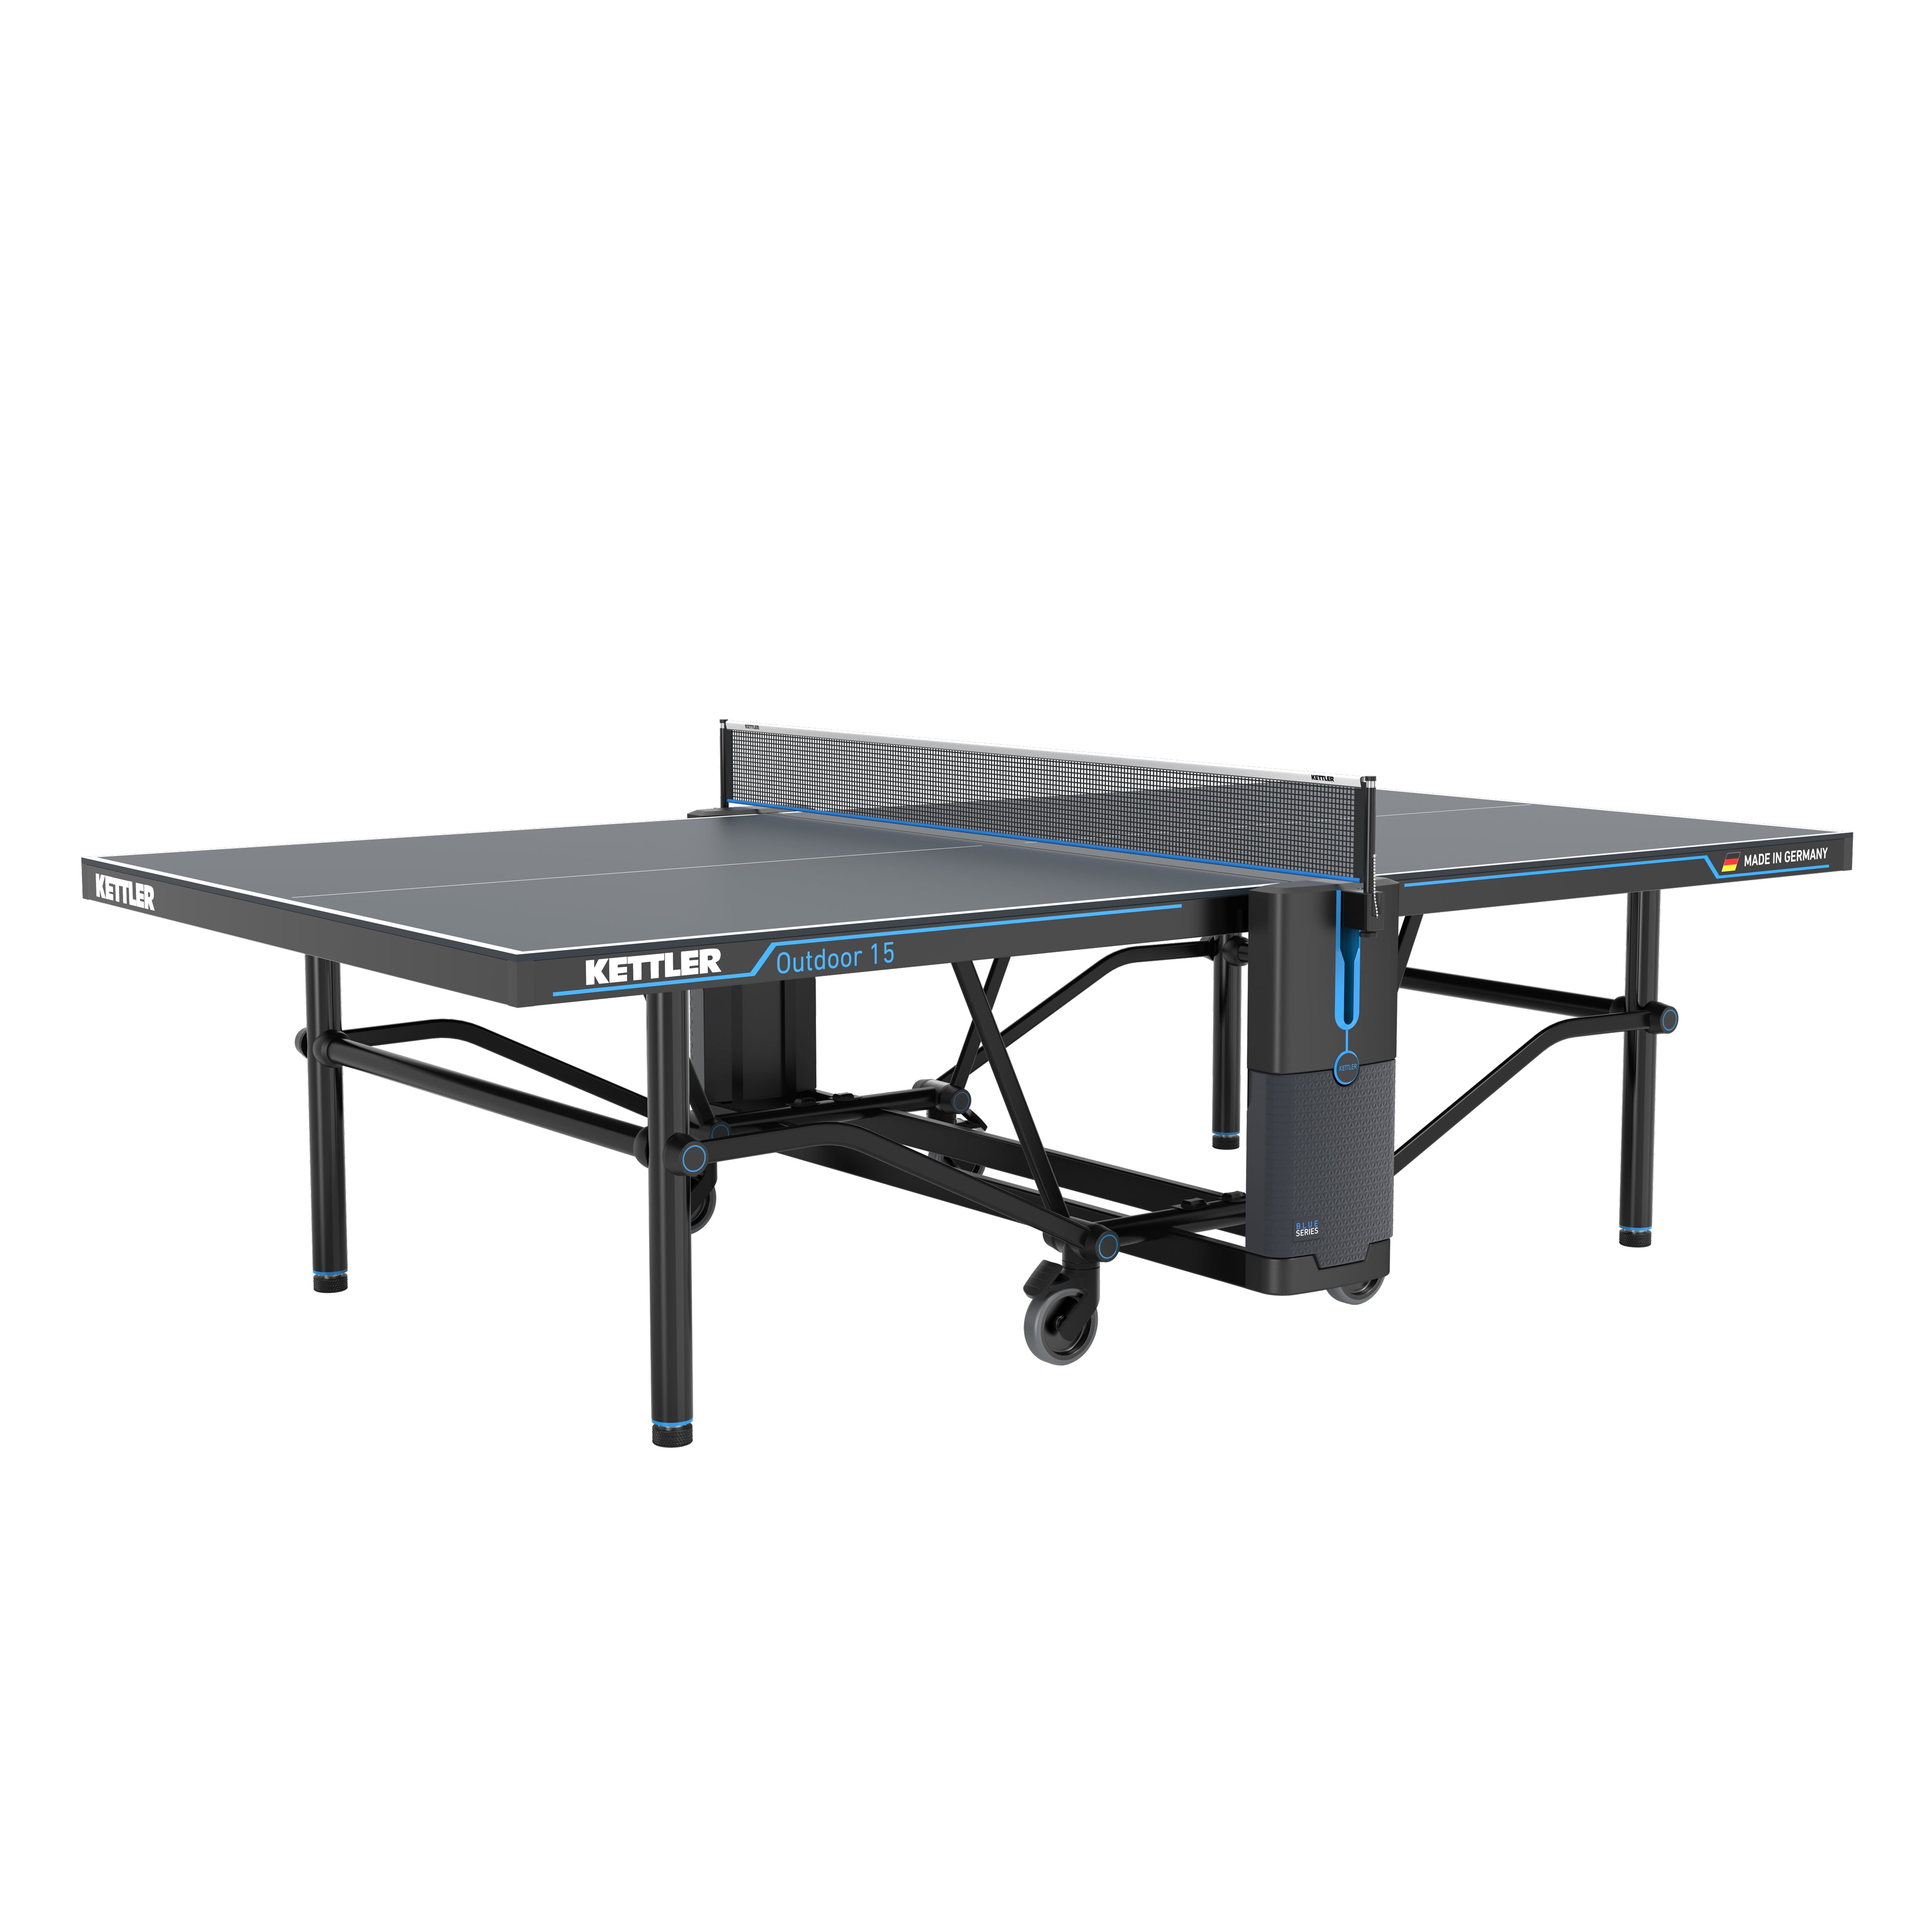 table tennis for 4  Table tennis game, Table tennis, Table tennis set